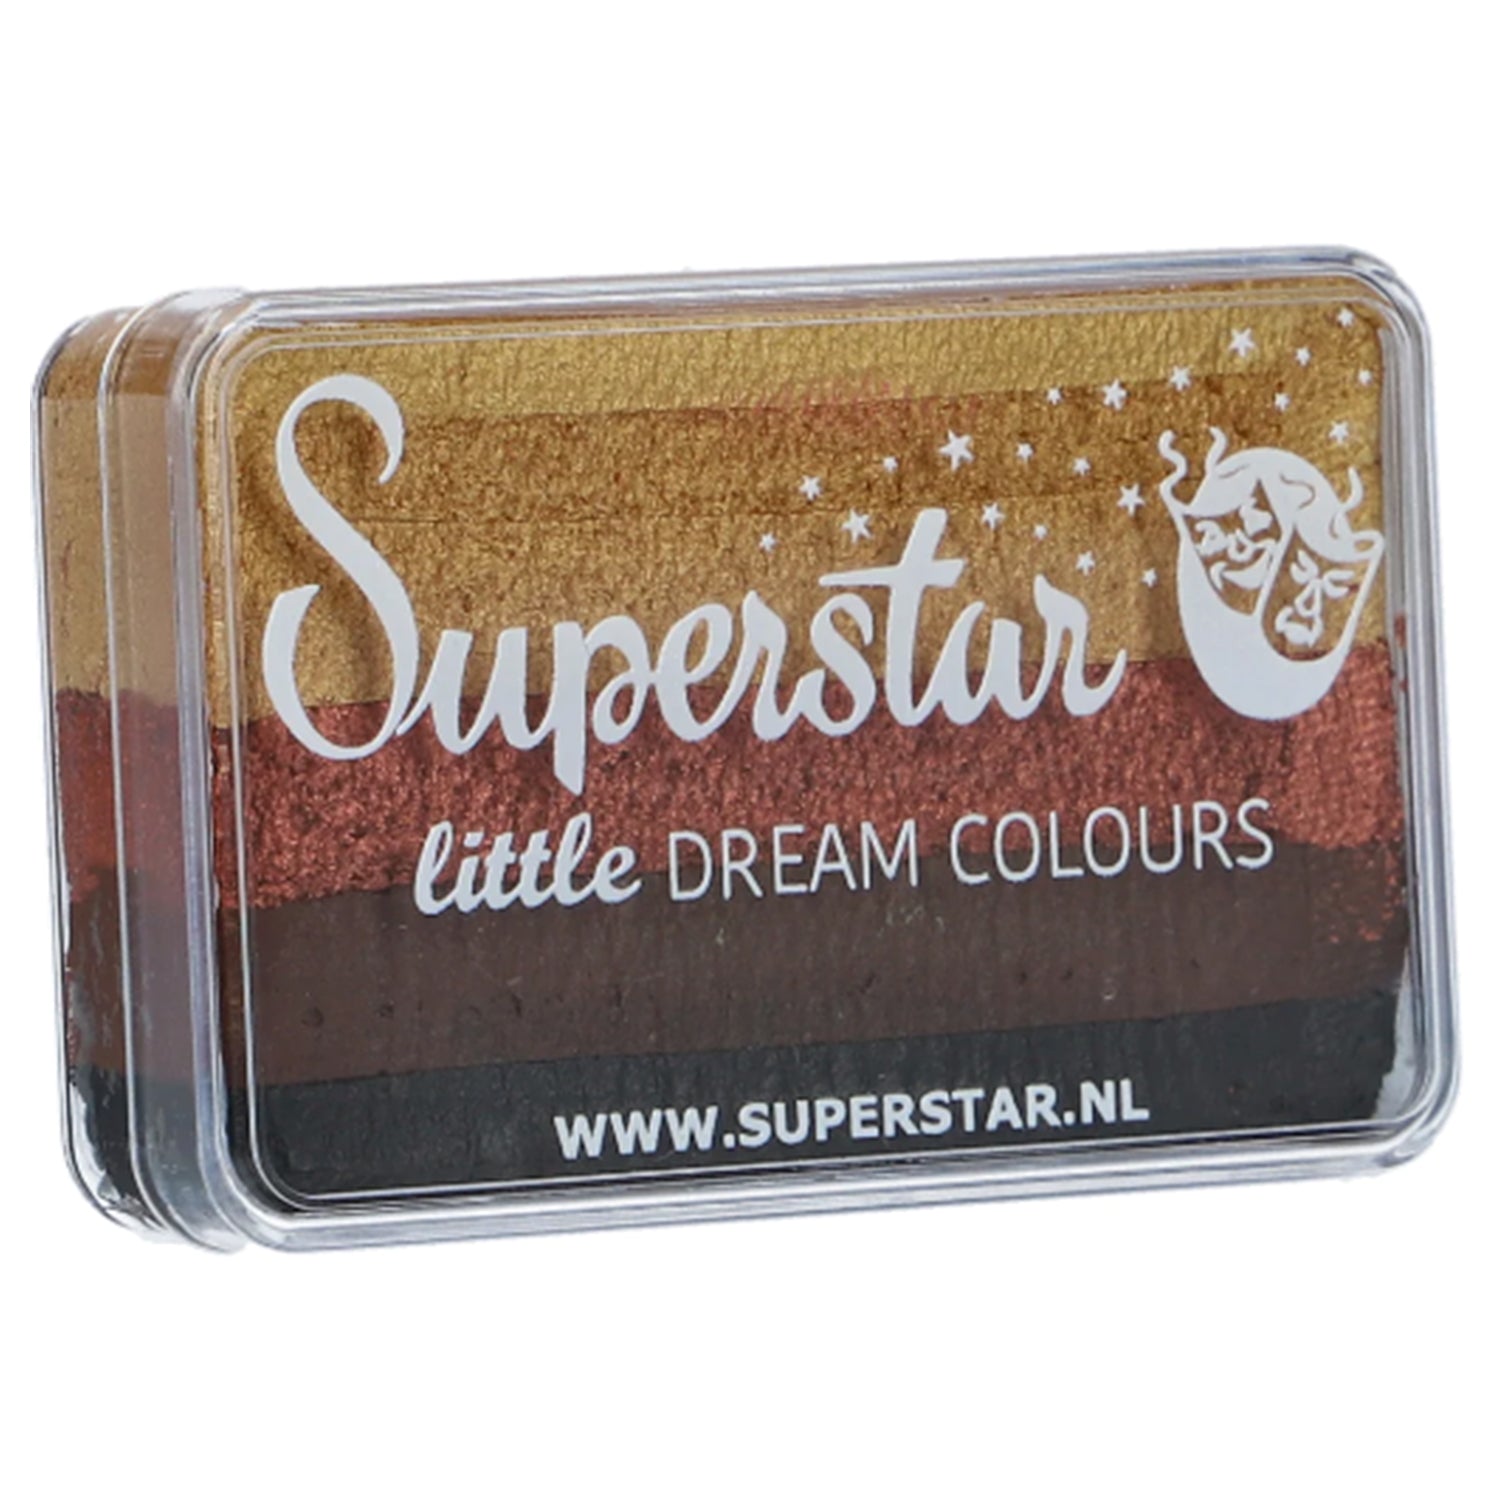 Superstar Dream Colours Rainbow Cake - Little Safari (1.06 oz/30 gm)